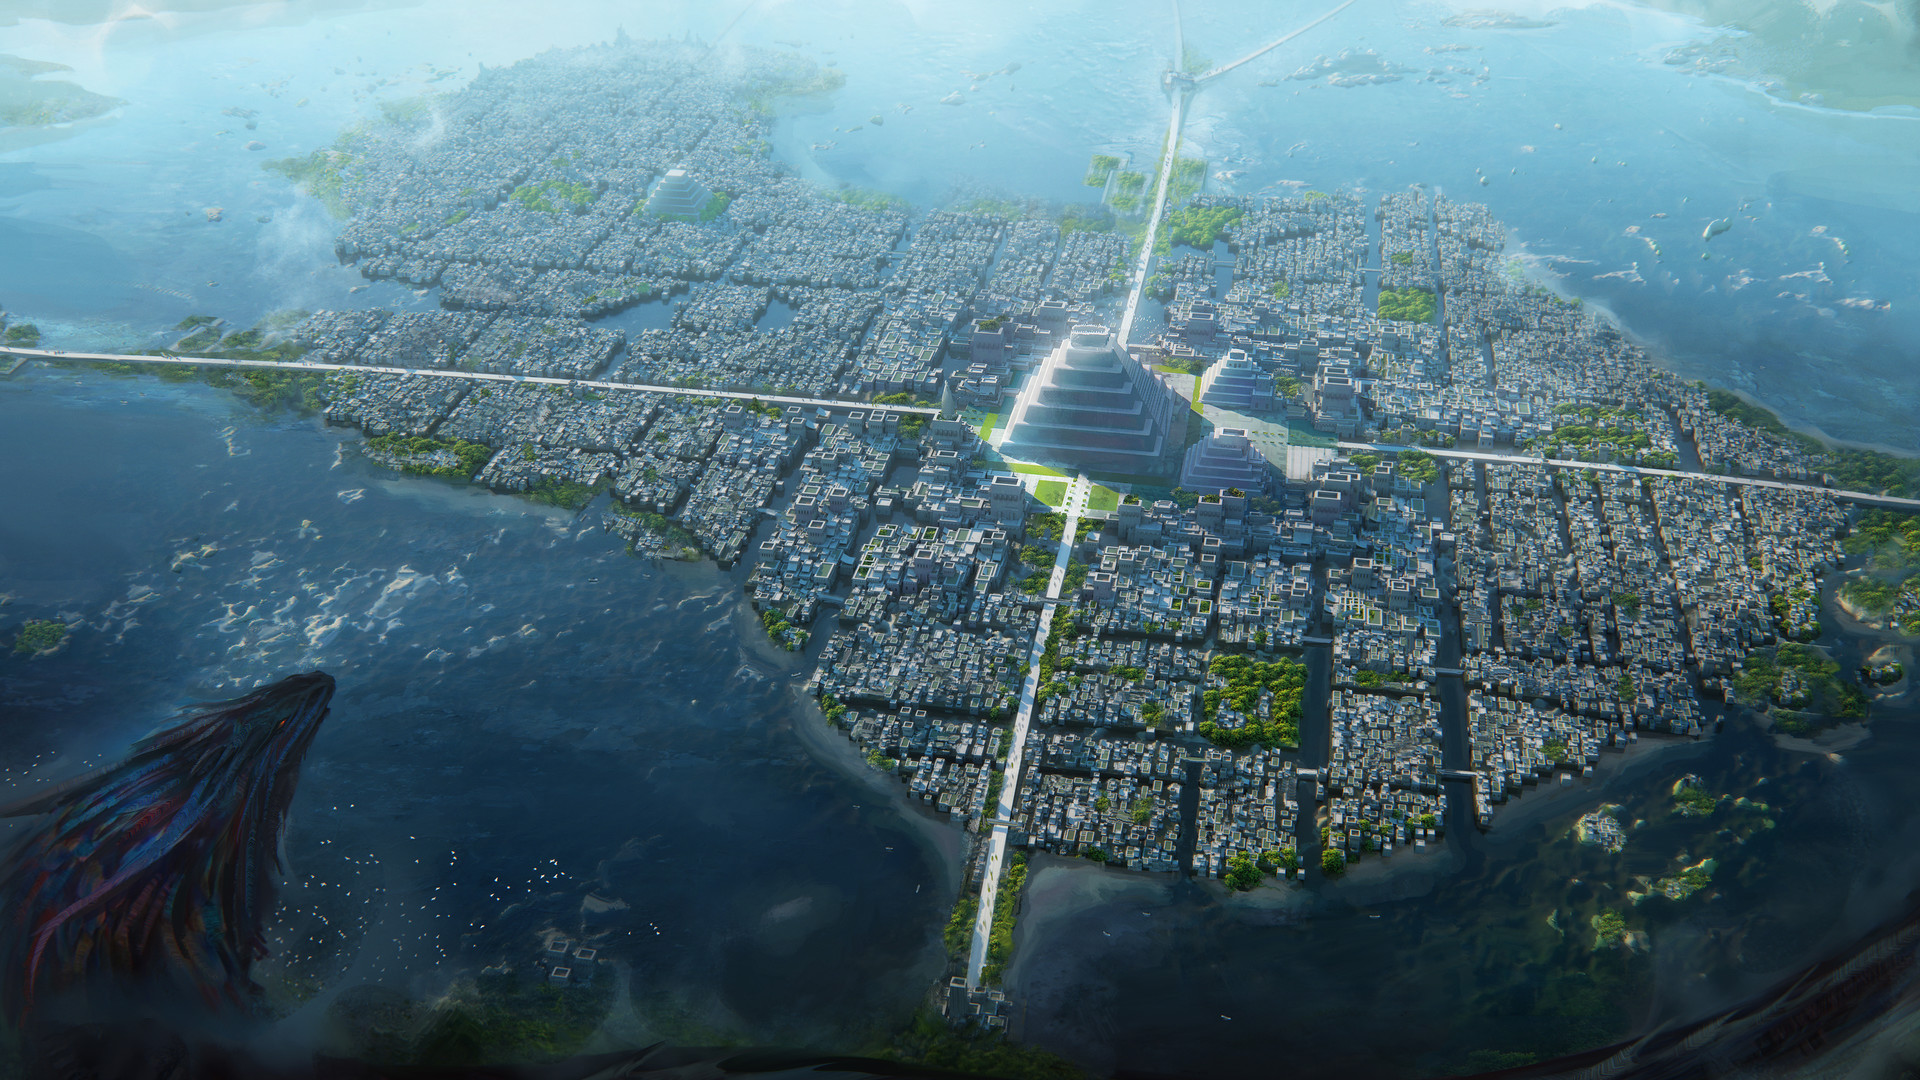 Dragons conquer America - Tenochtitlan city by Leon Tukker